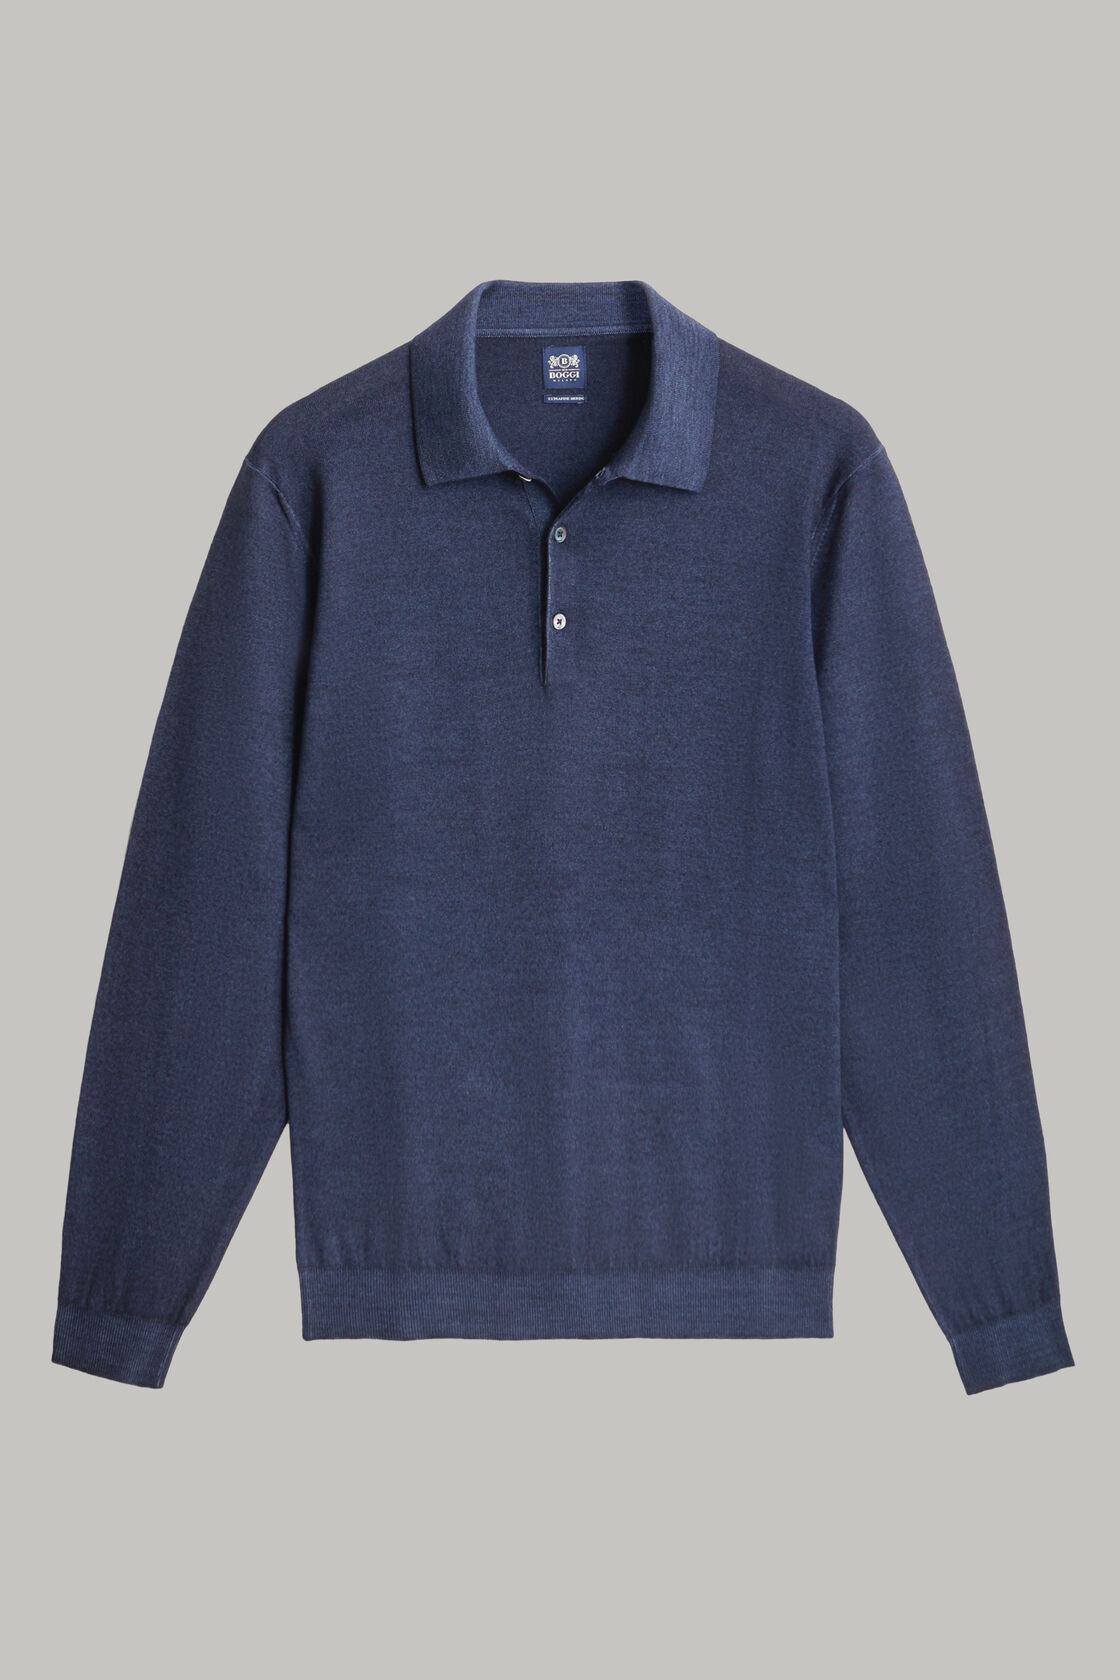 Navy merino wool knitted polo shirt, , hi-res